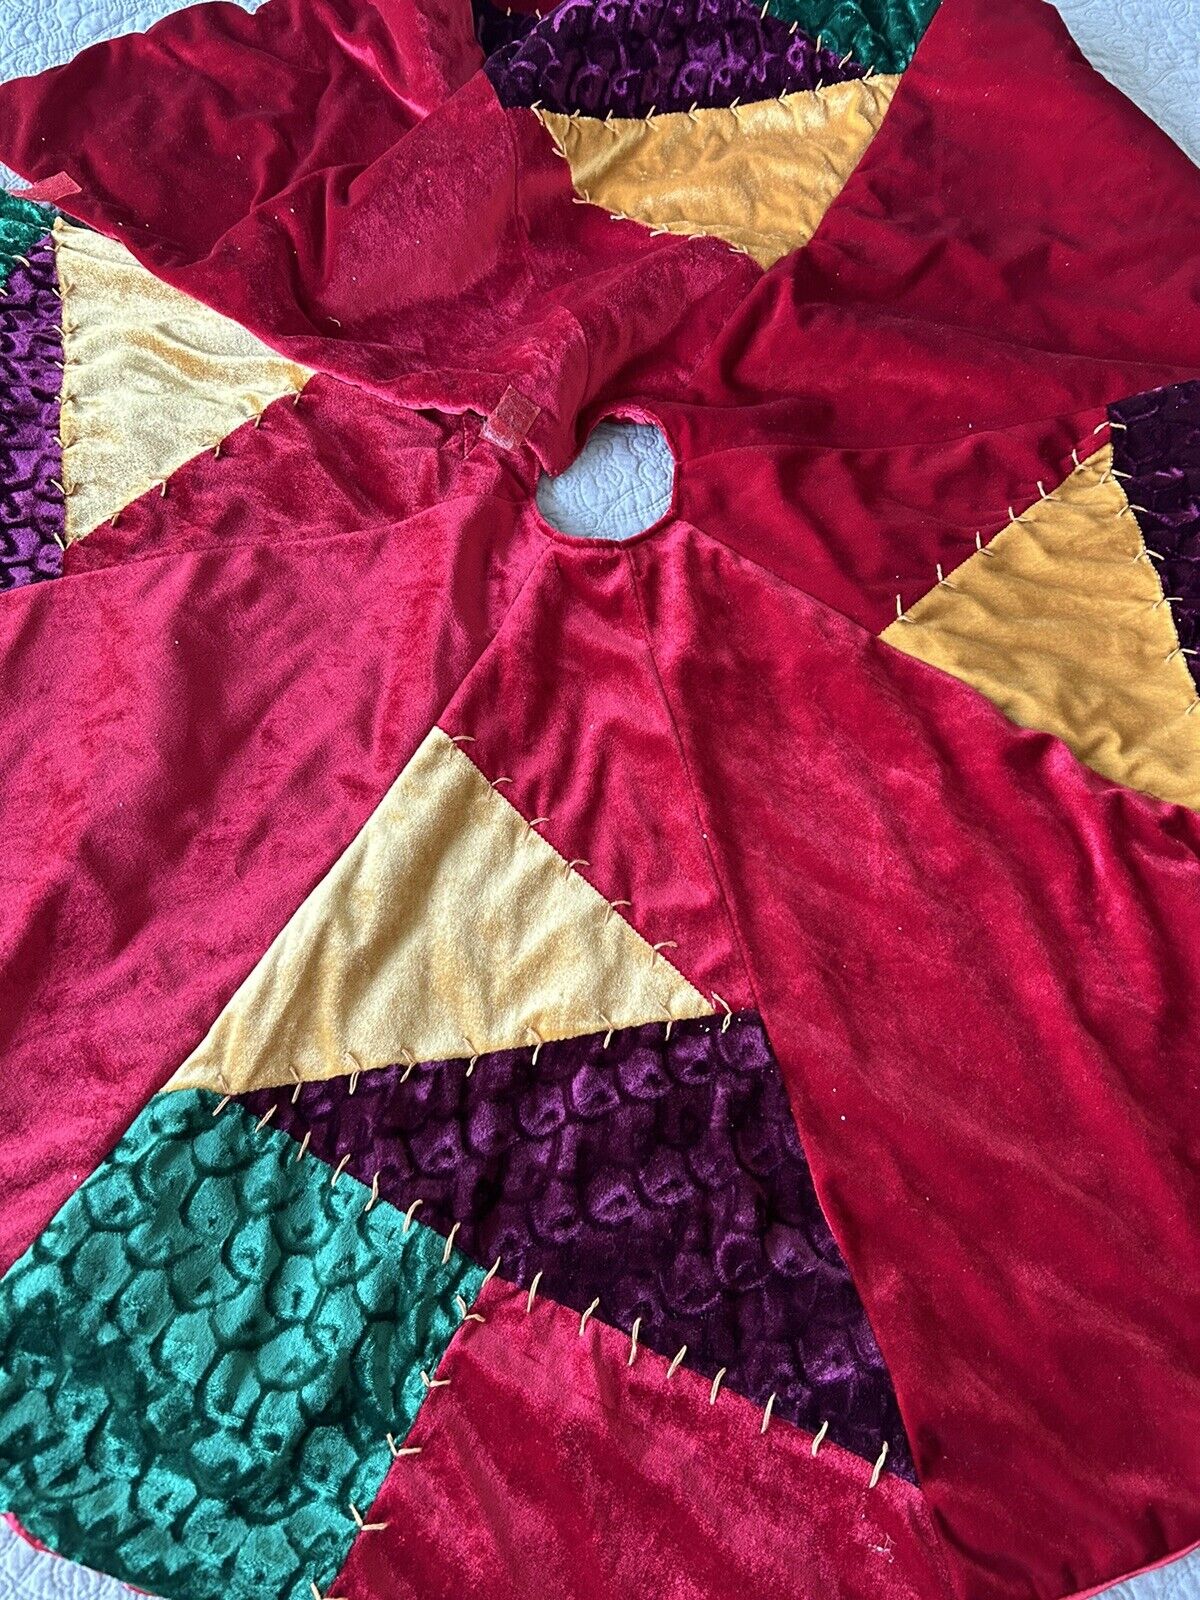 Dan Dee Vintage Colorful Crazy Quilt Design Velvet Tree Skirt 46